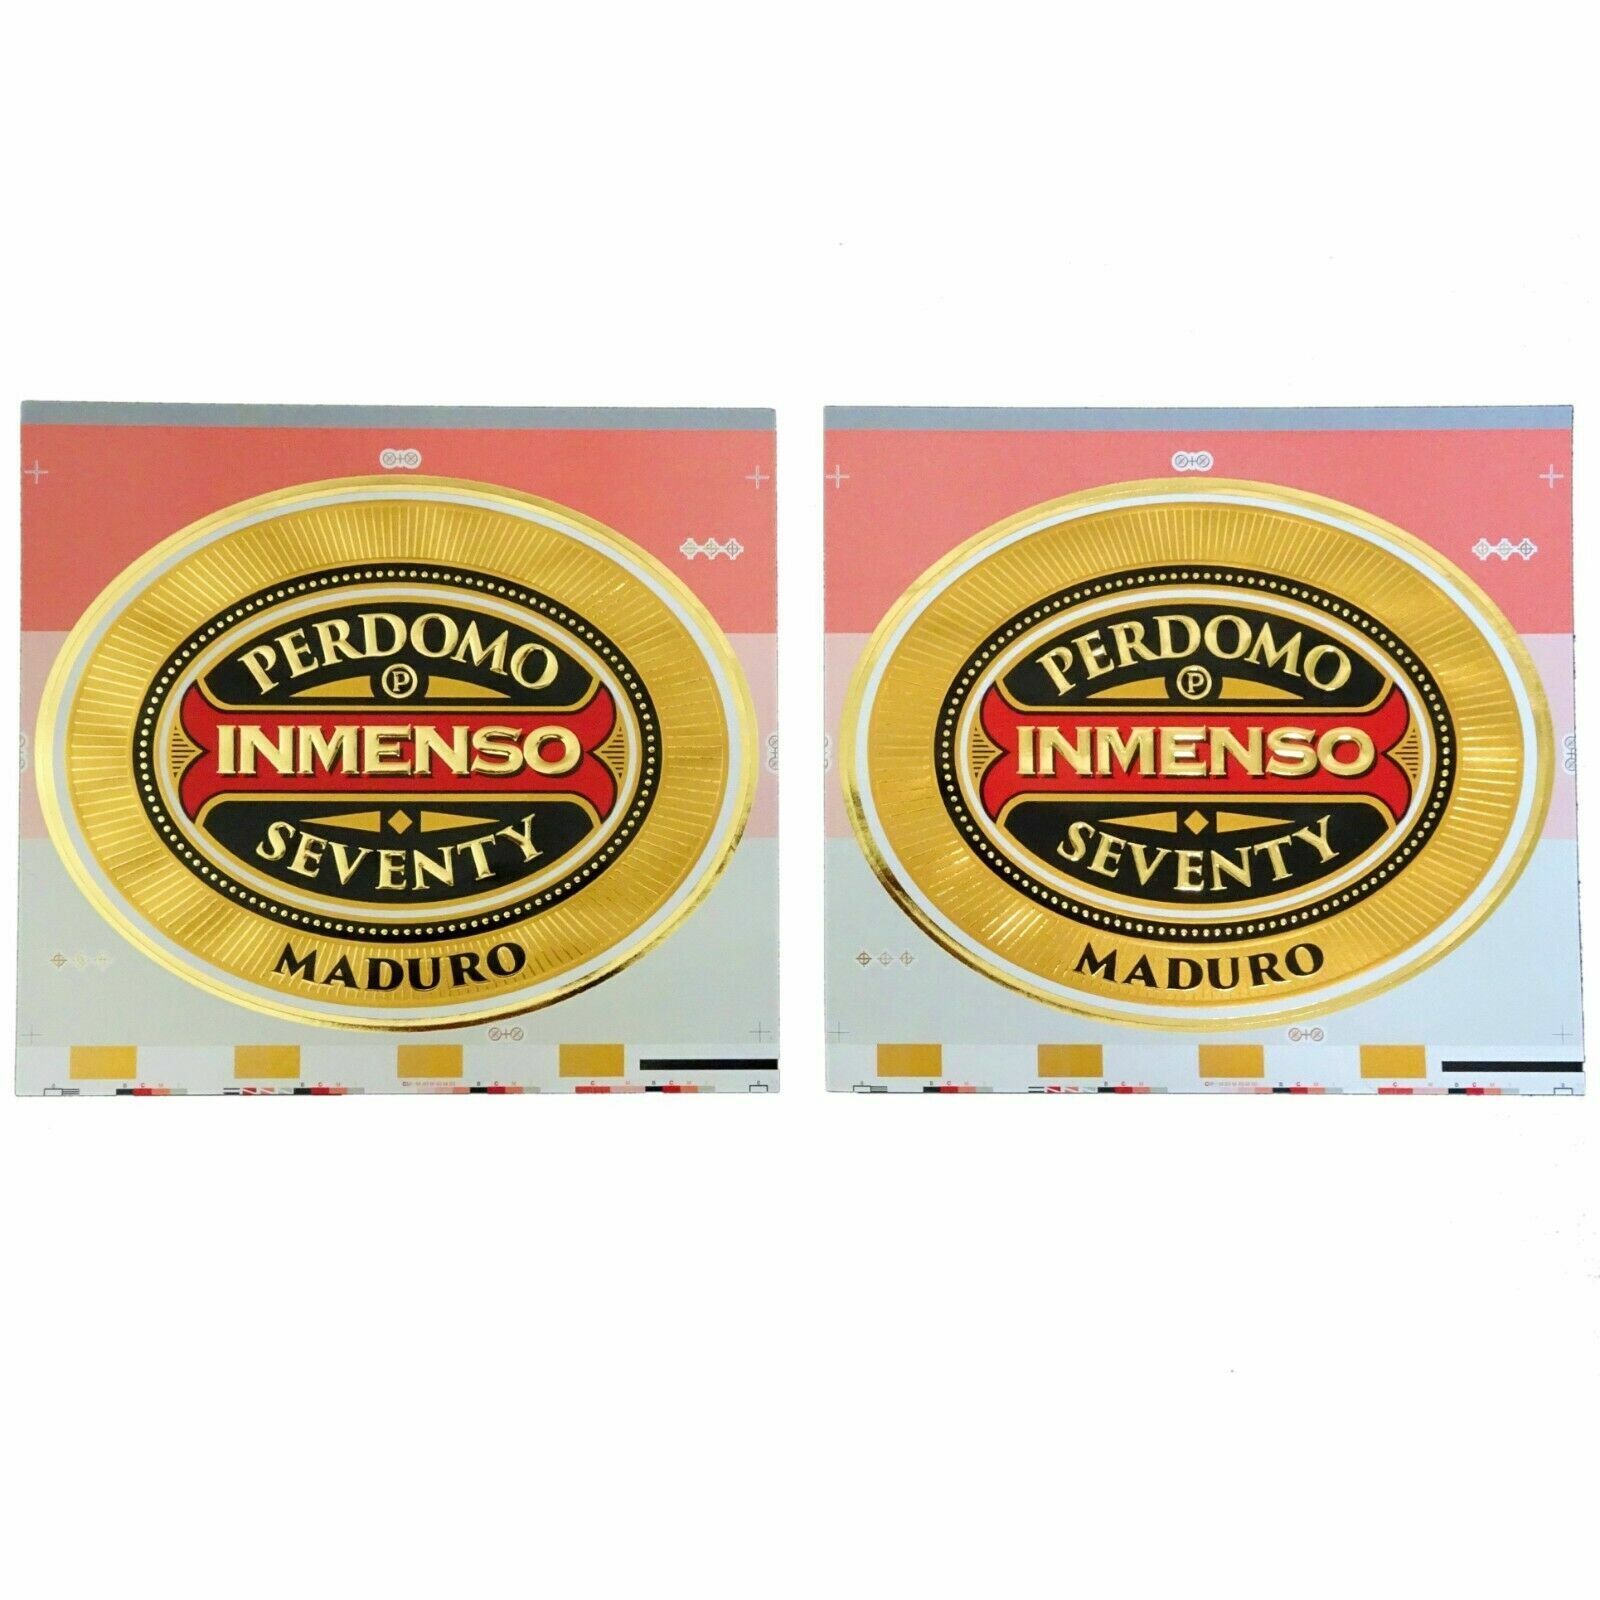 Lot of 2 Perdomo Inmenso Seventy Maduro Cigars Box Labels 4x5 Decals Stickers  Без бренда